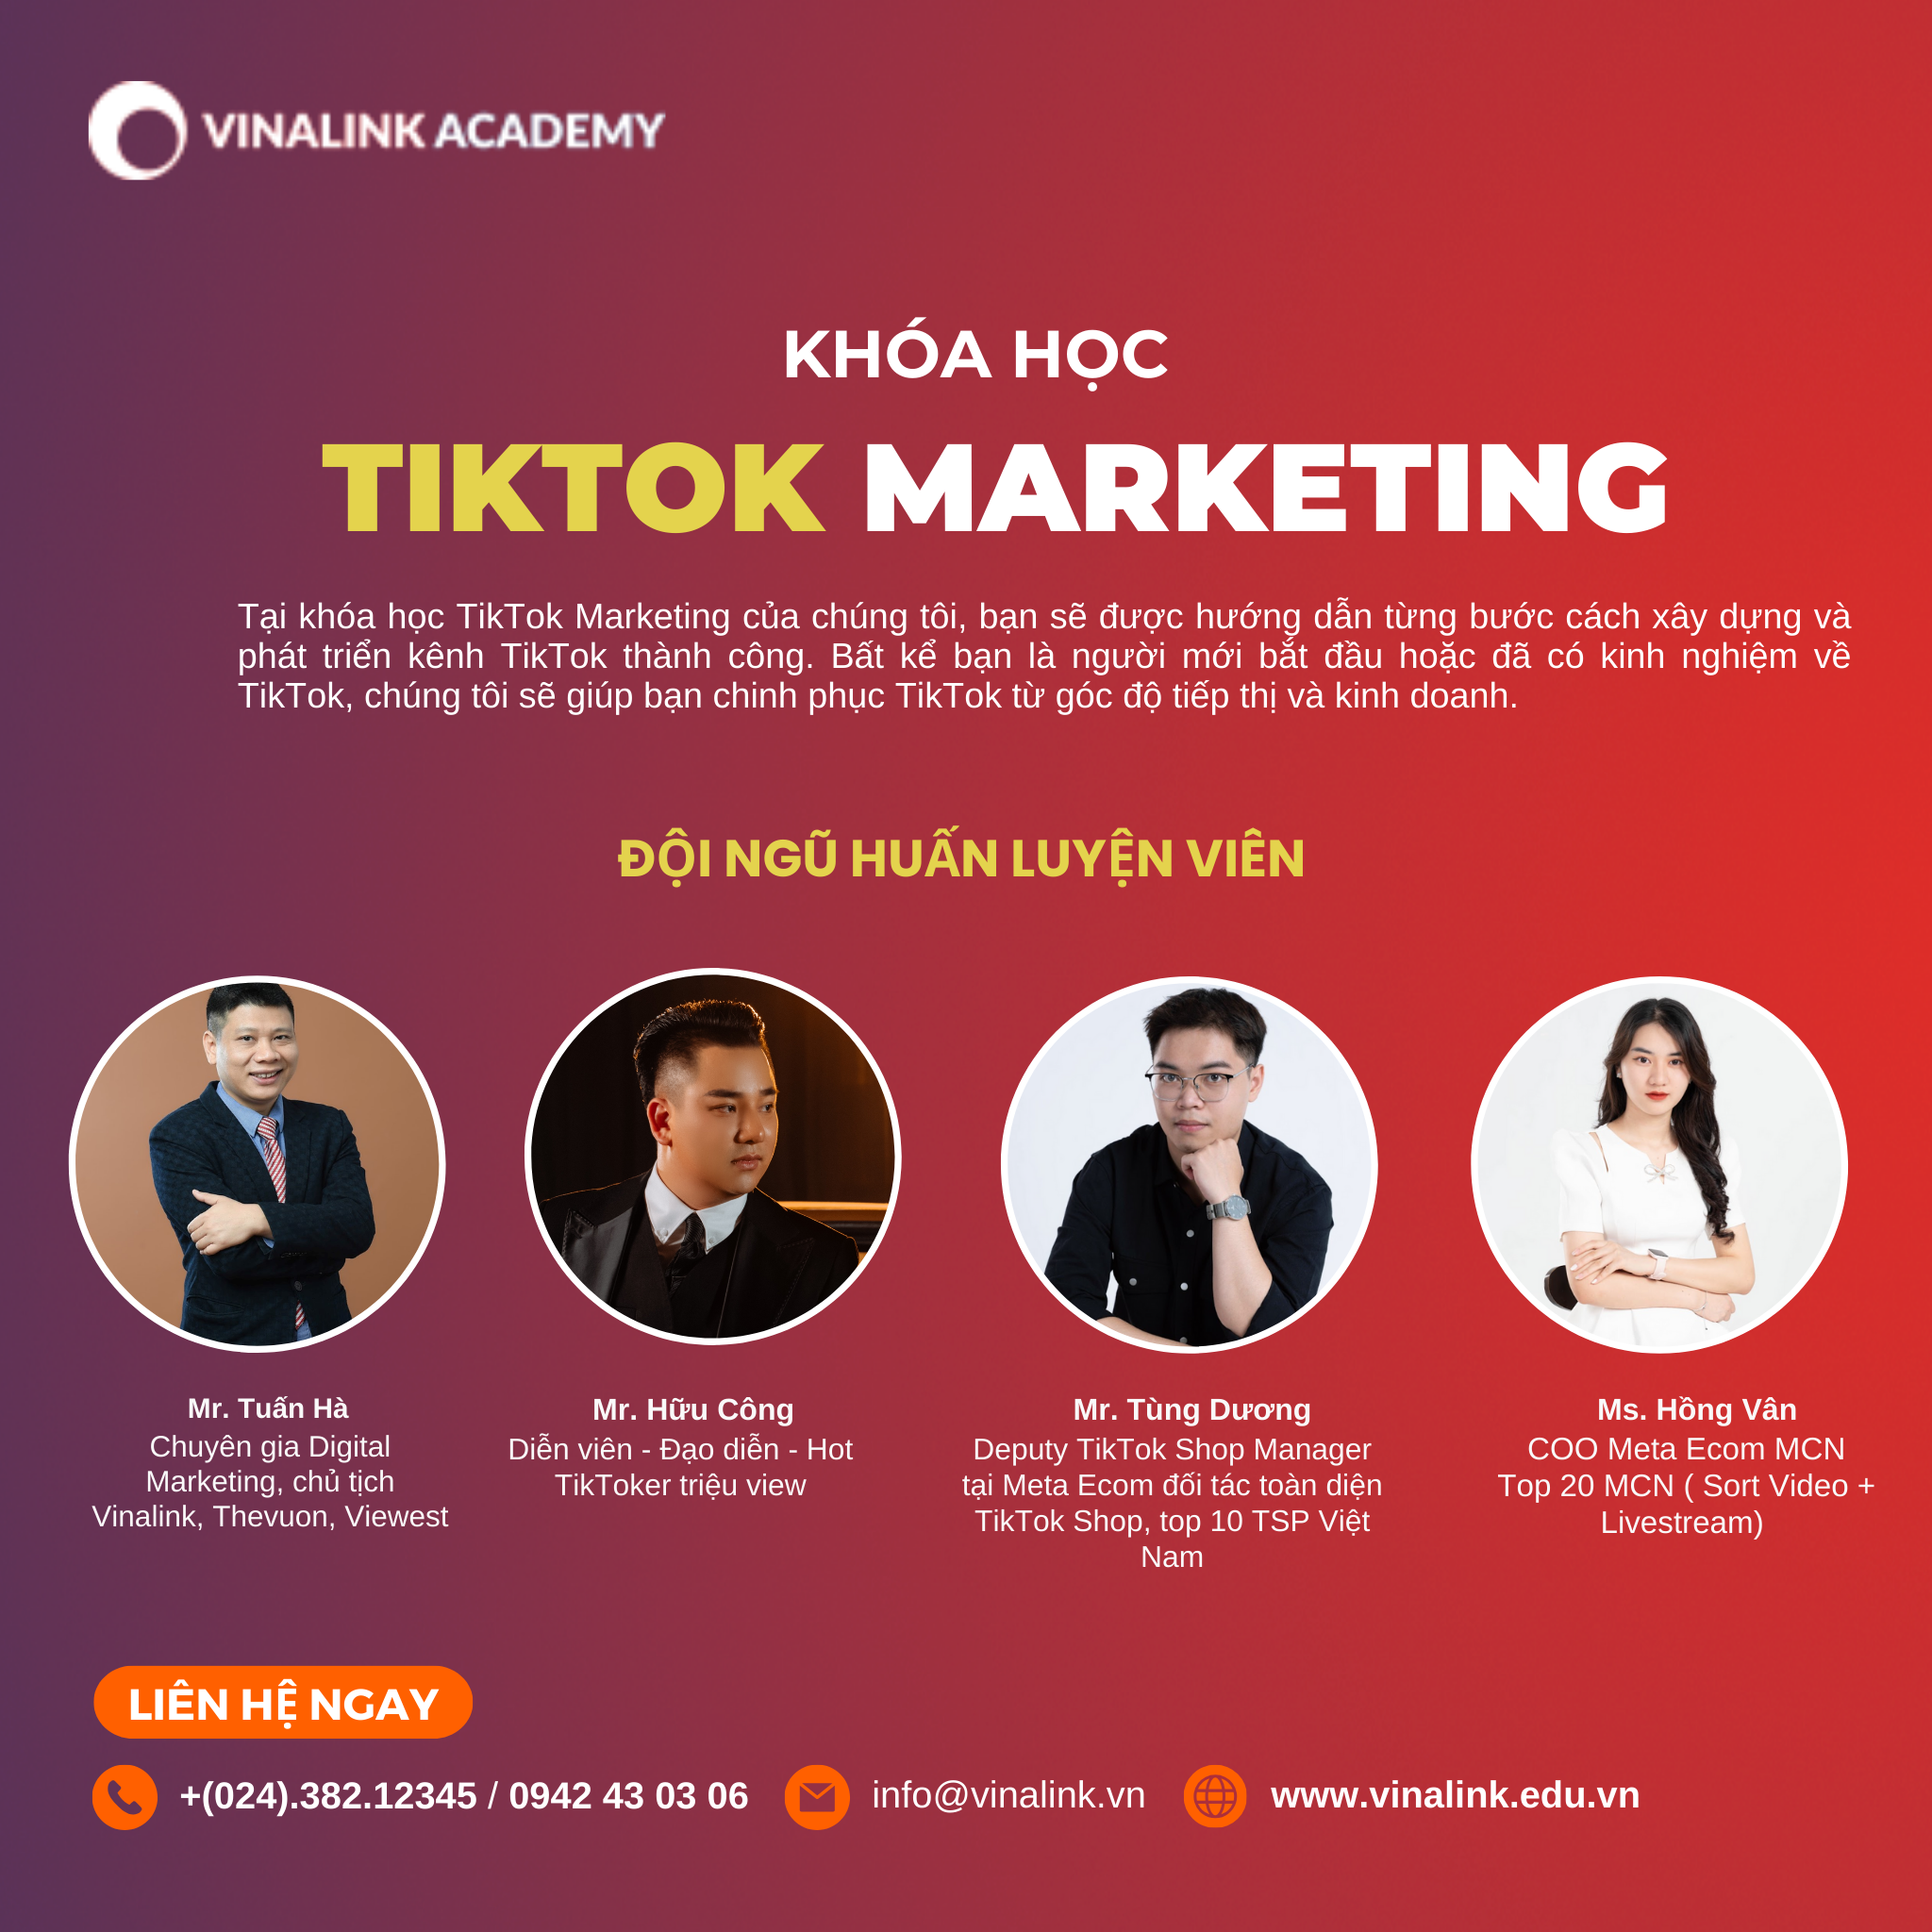 Khoá học Tiktok Marketing của Vinalink Academy